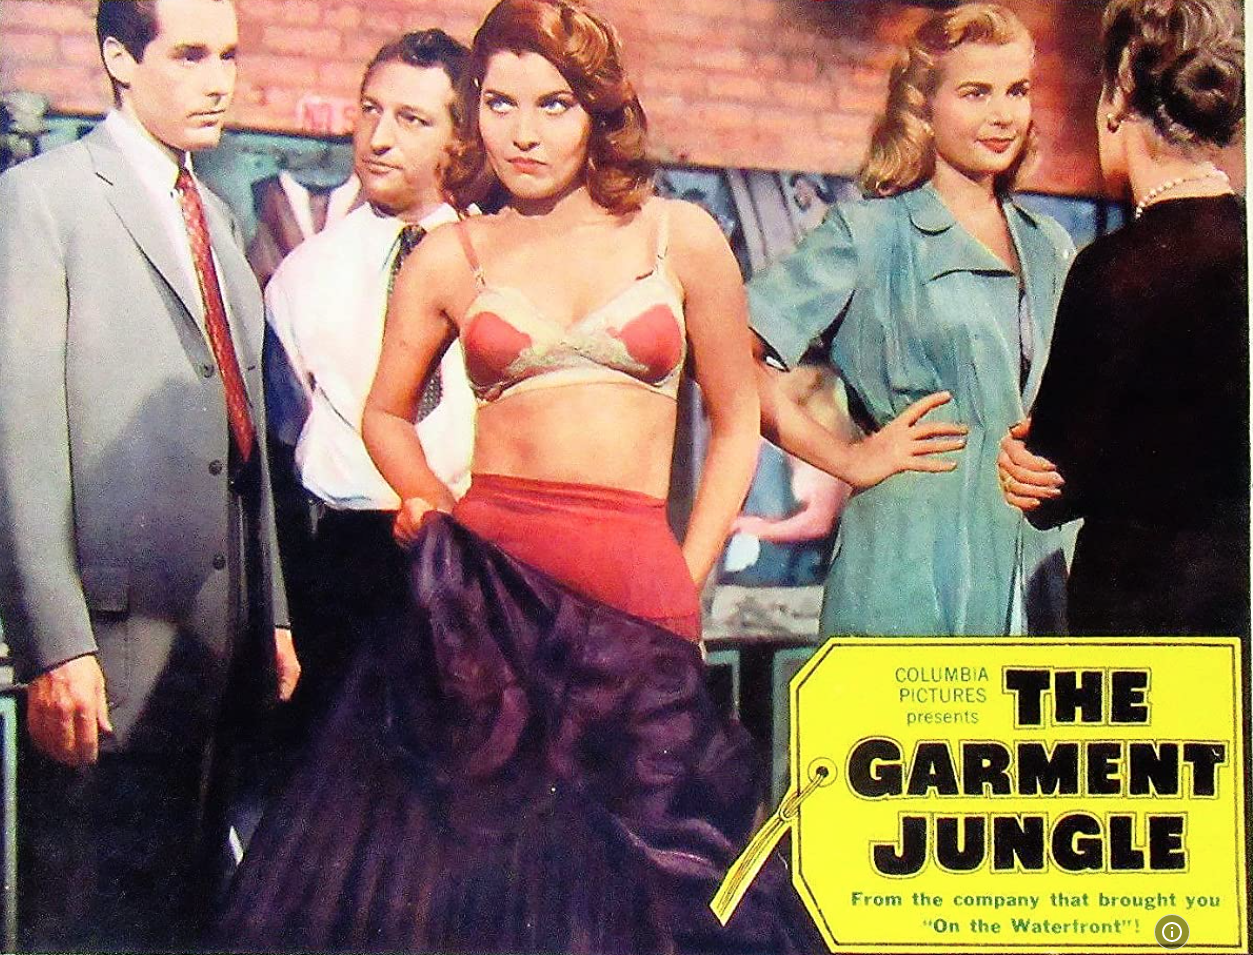 Kerwin Mathews - Gia Scala (The garment jungle) 1957